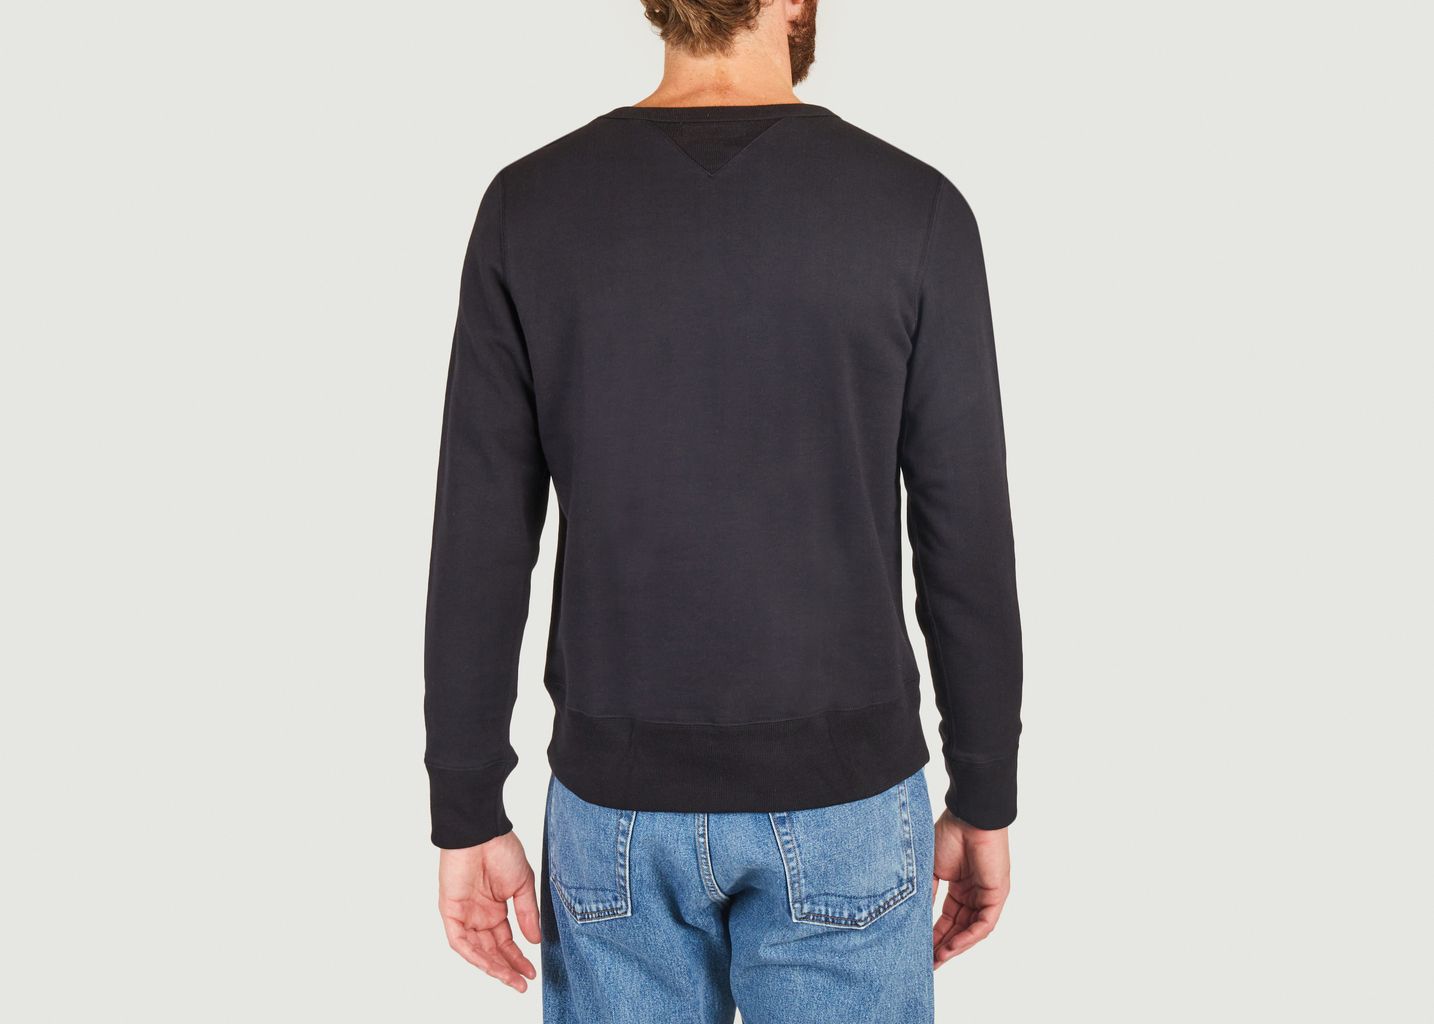 Loopwheeled sweatshirt - Merz b Schwanen